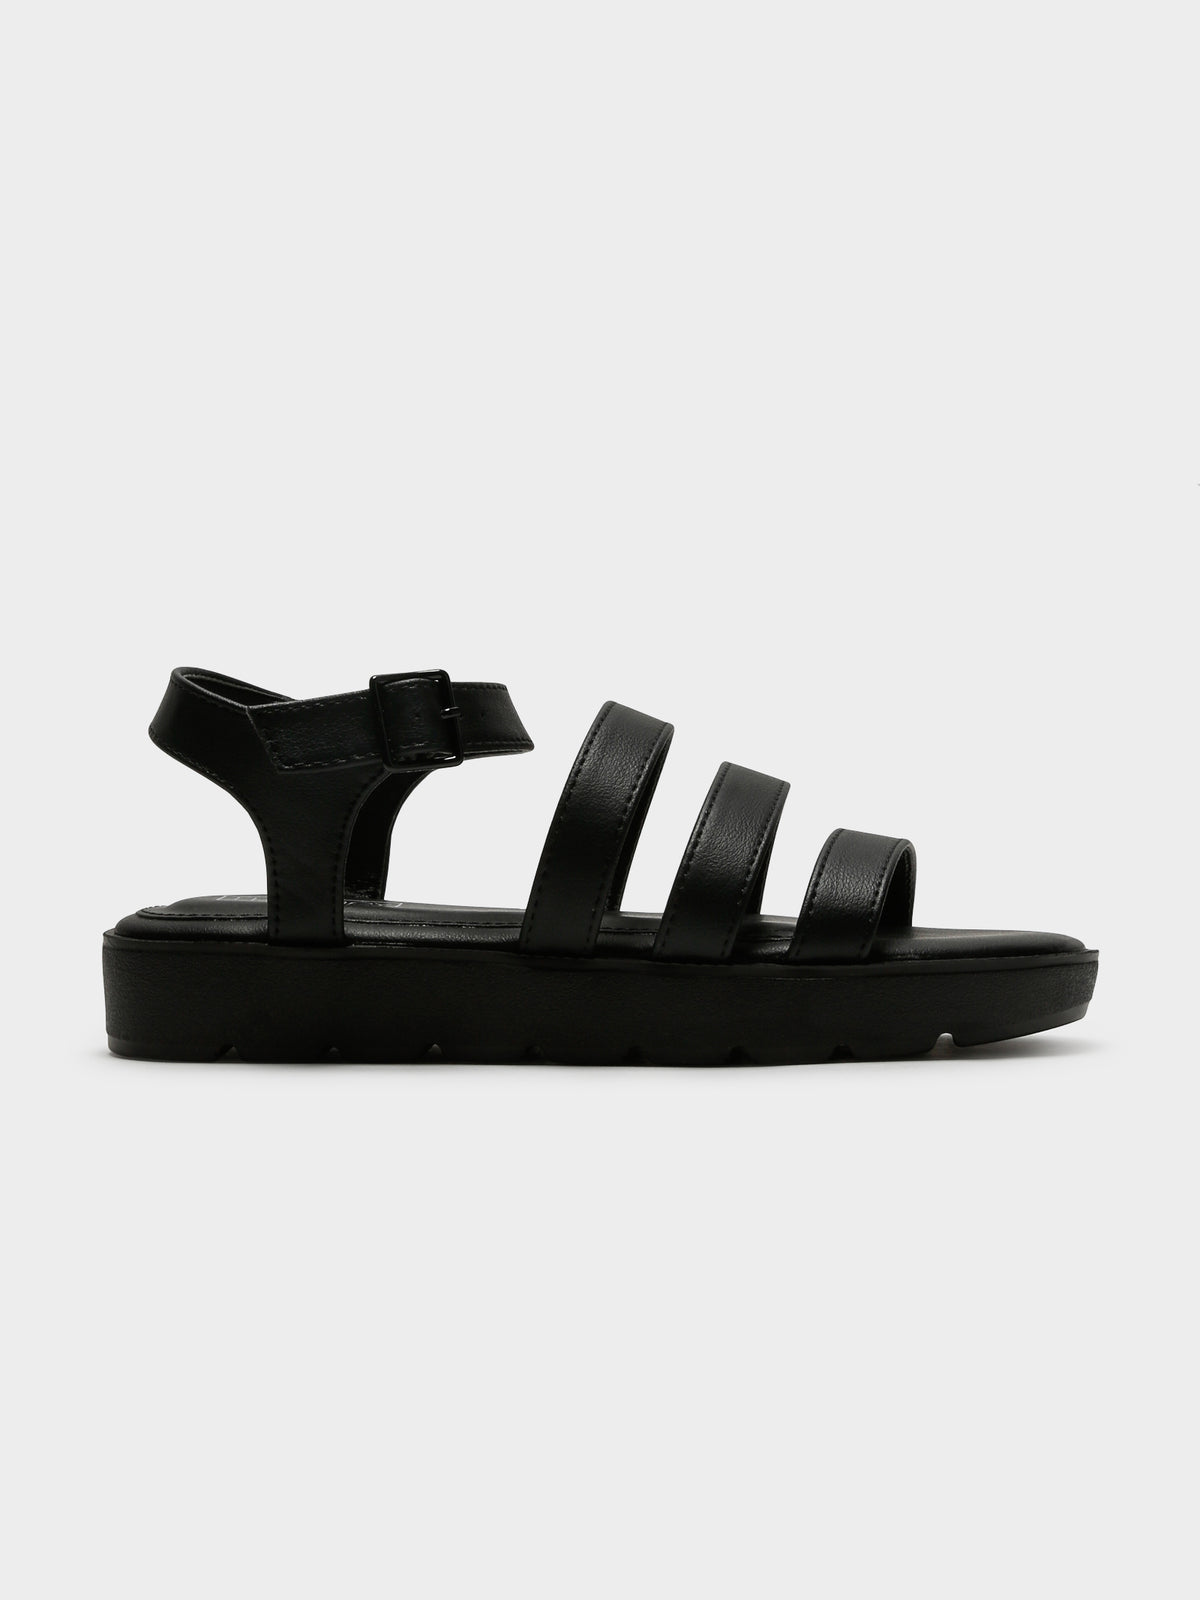 The Saxon Sandals in Black